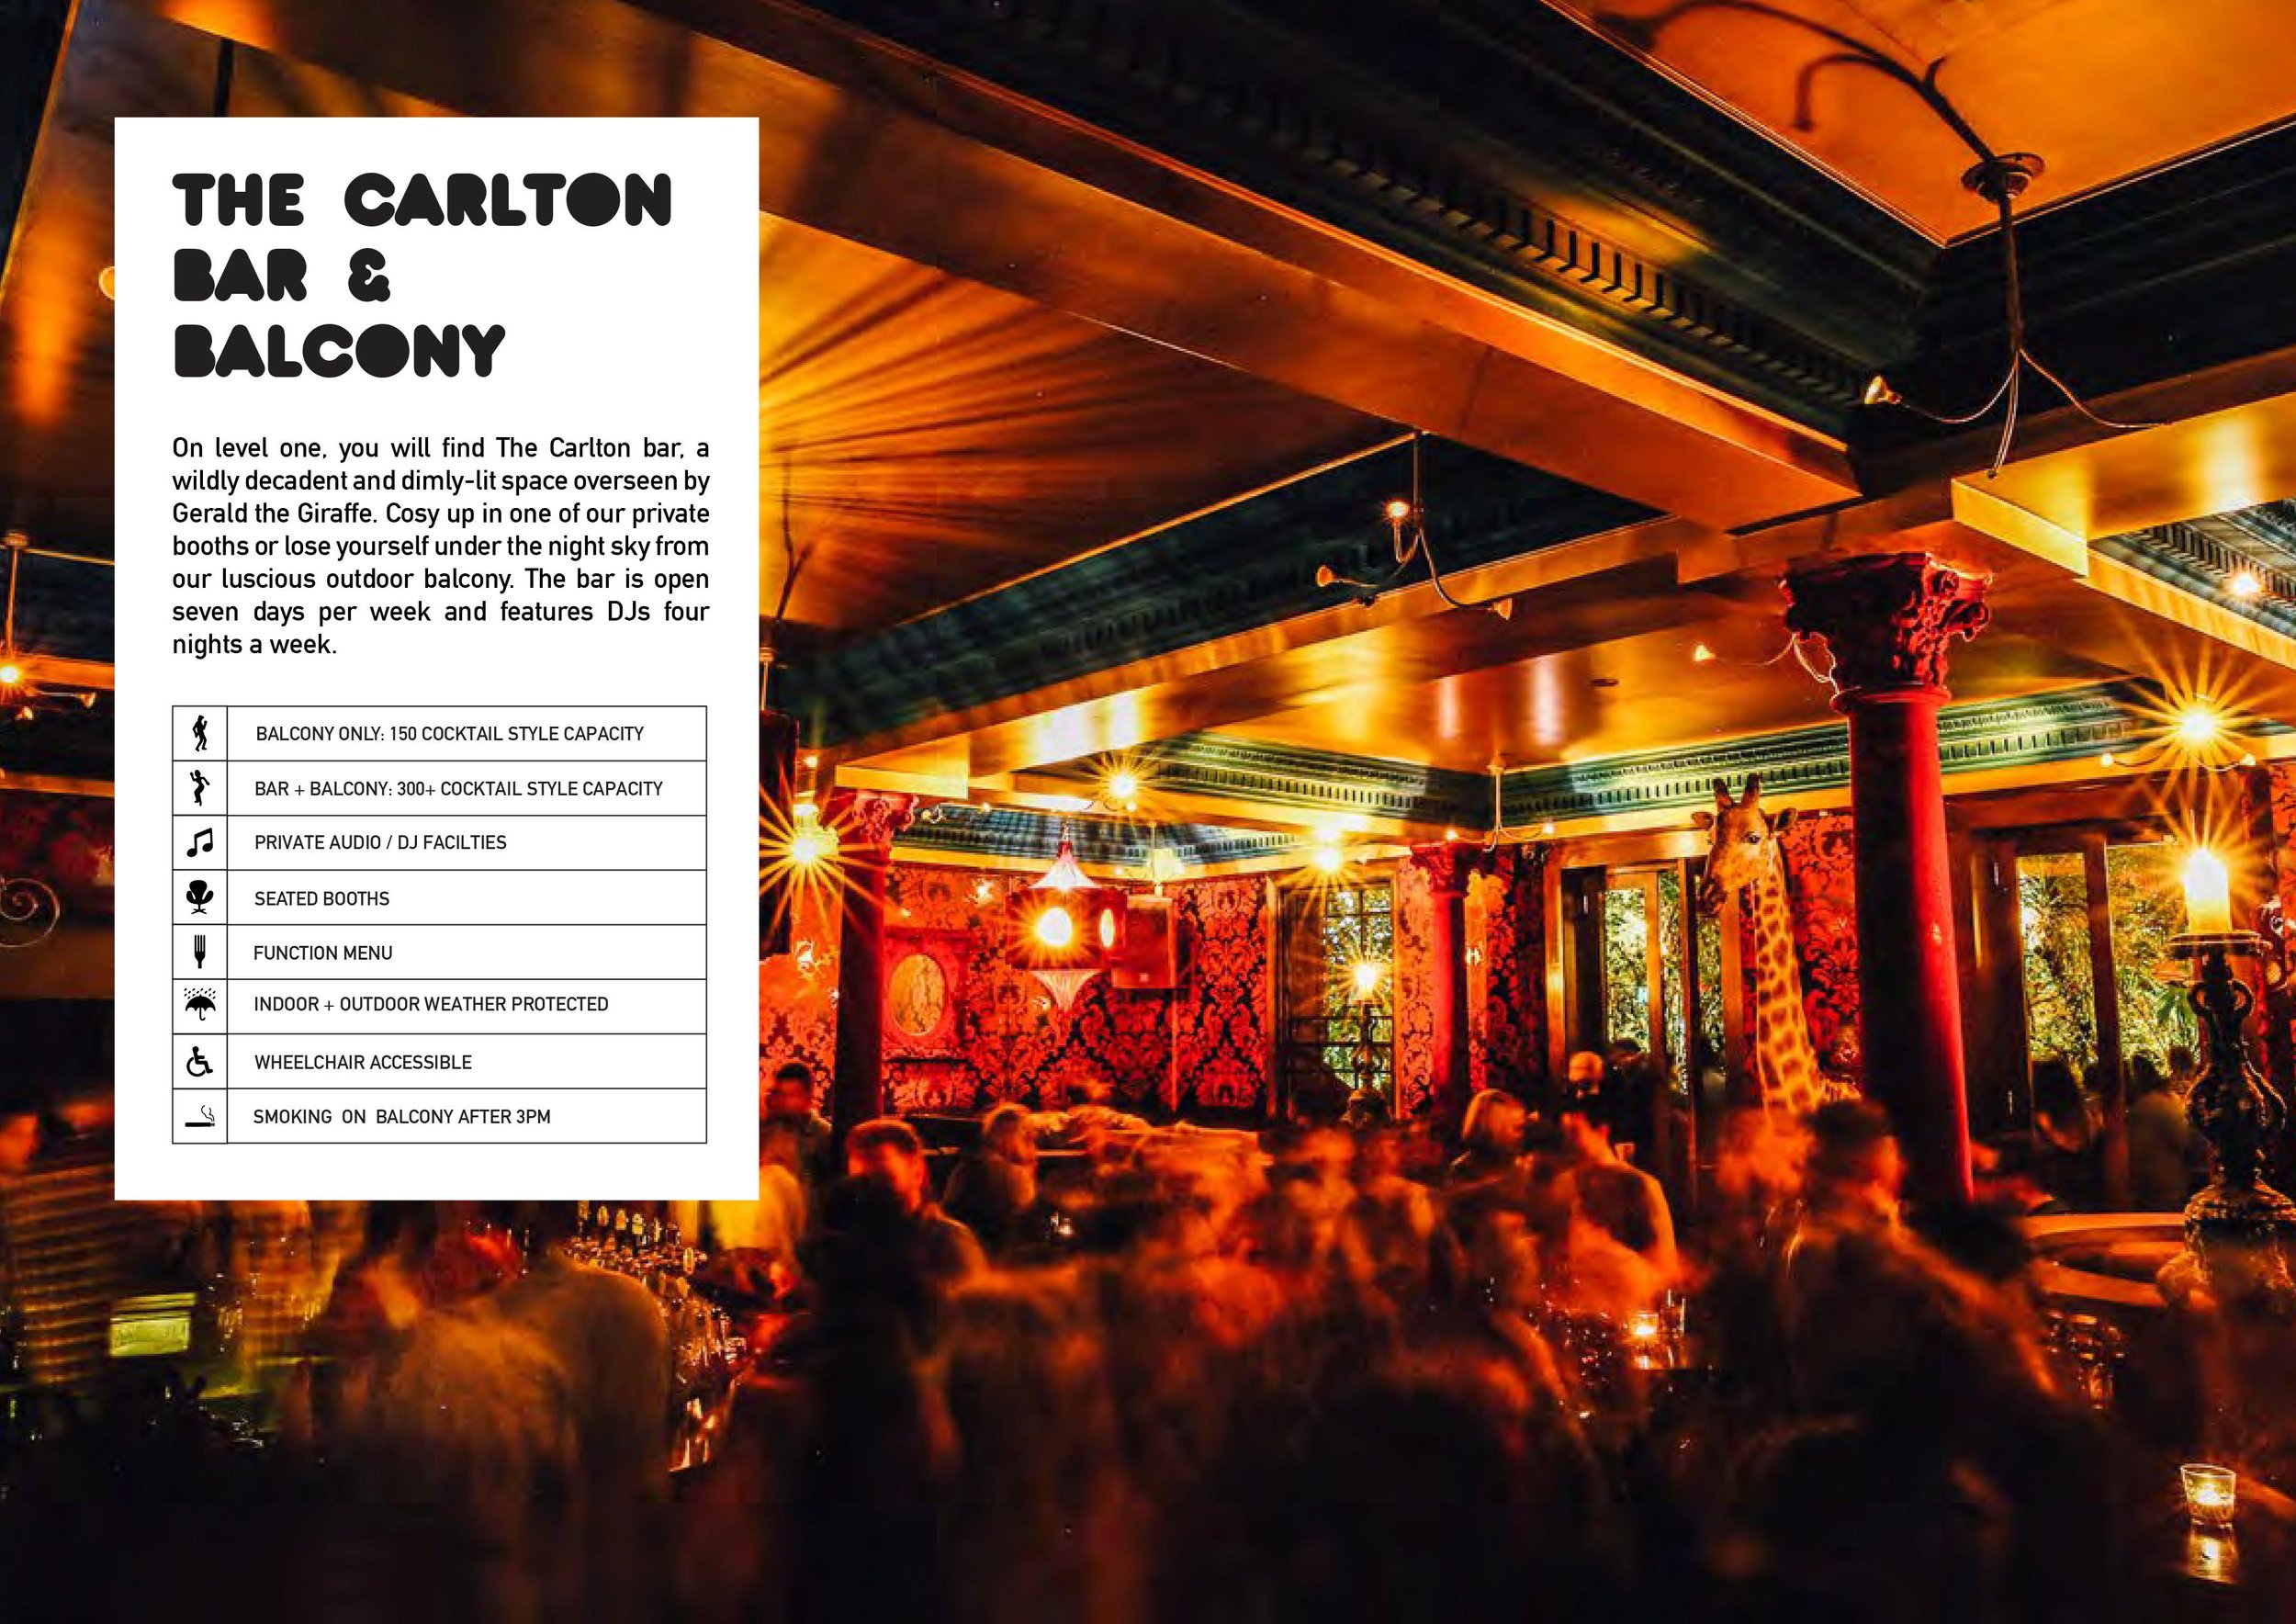 The carlton club nightclub melbourne function space bar and balcony